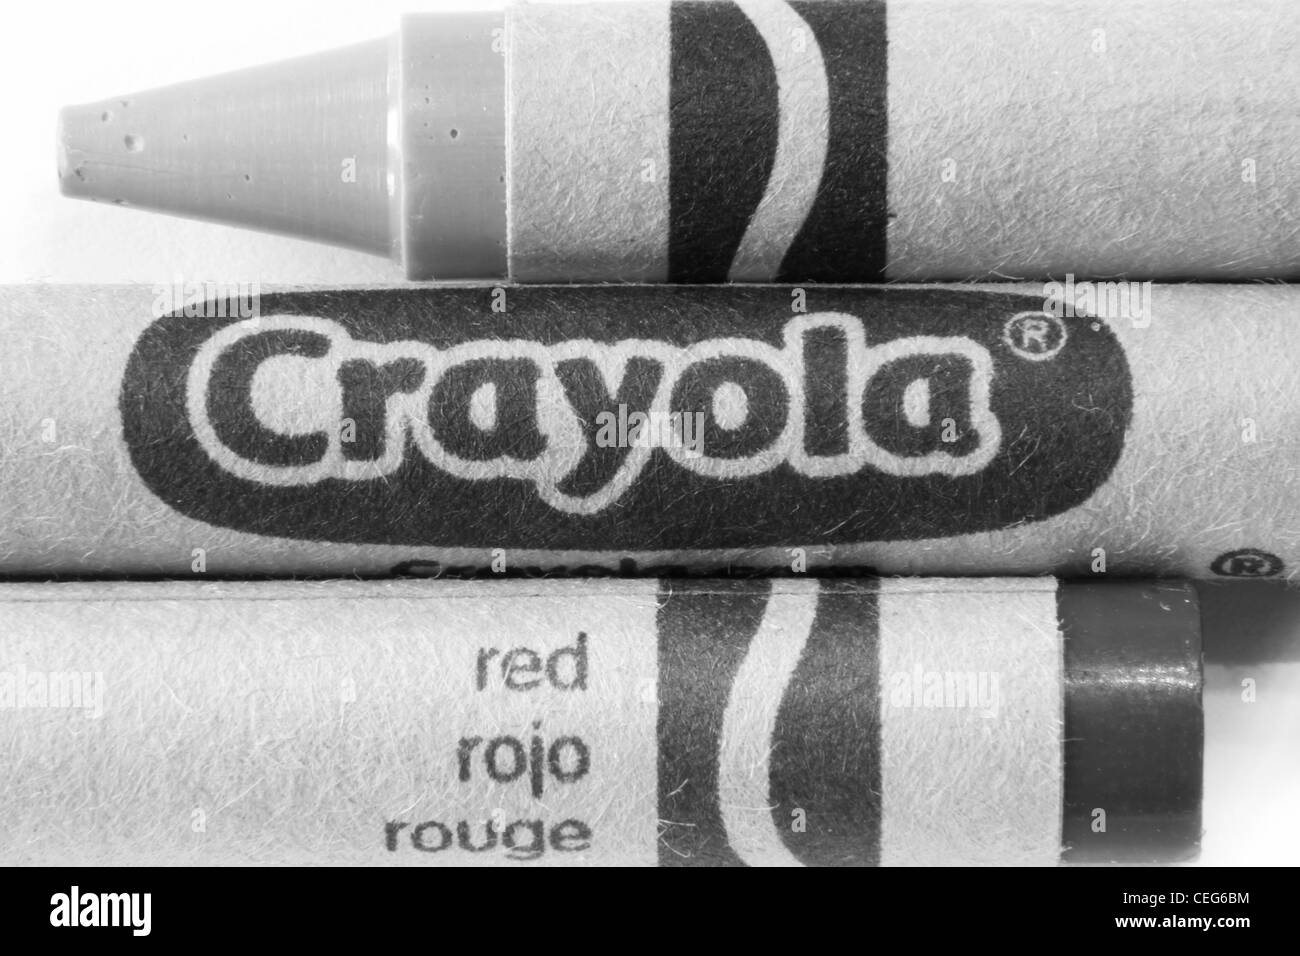 Crayola Black 